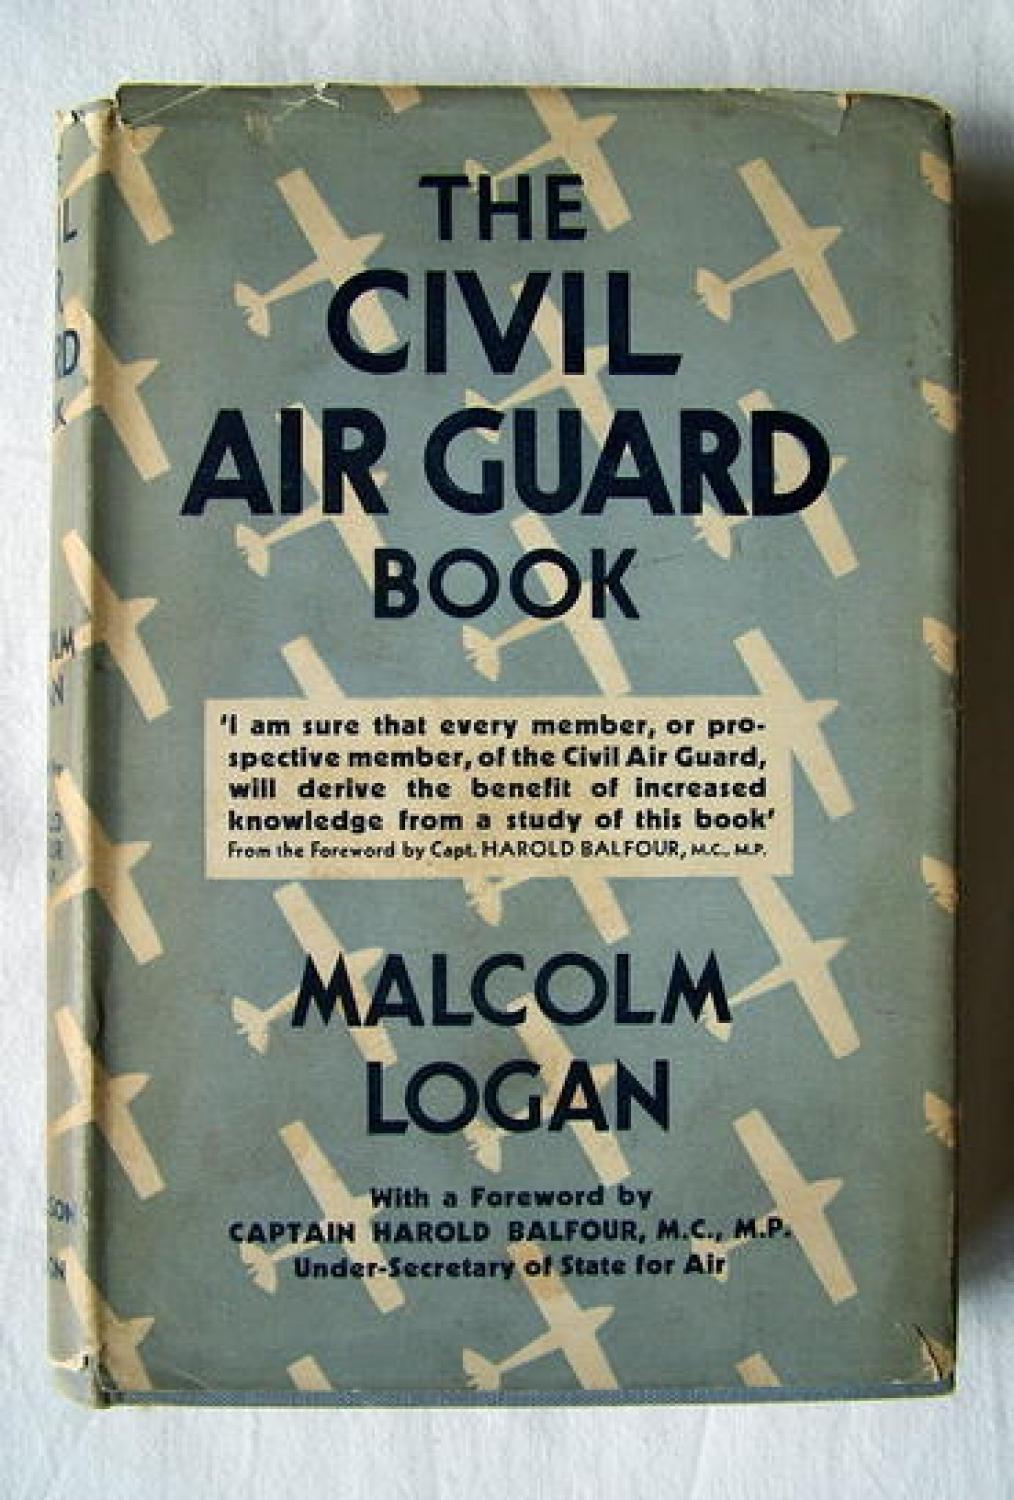 The Civil Guard Handbook